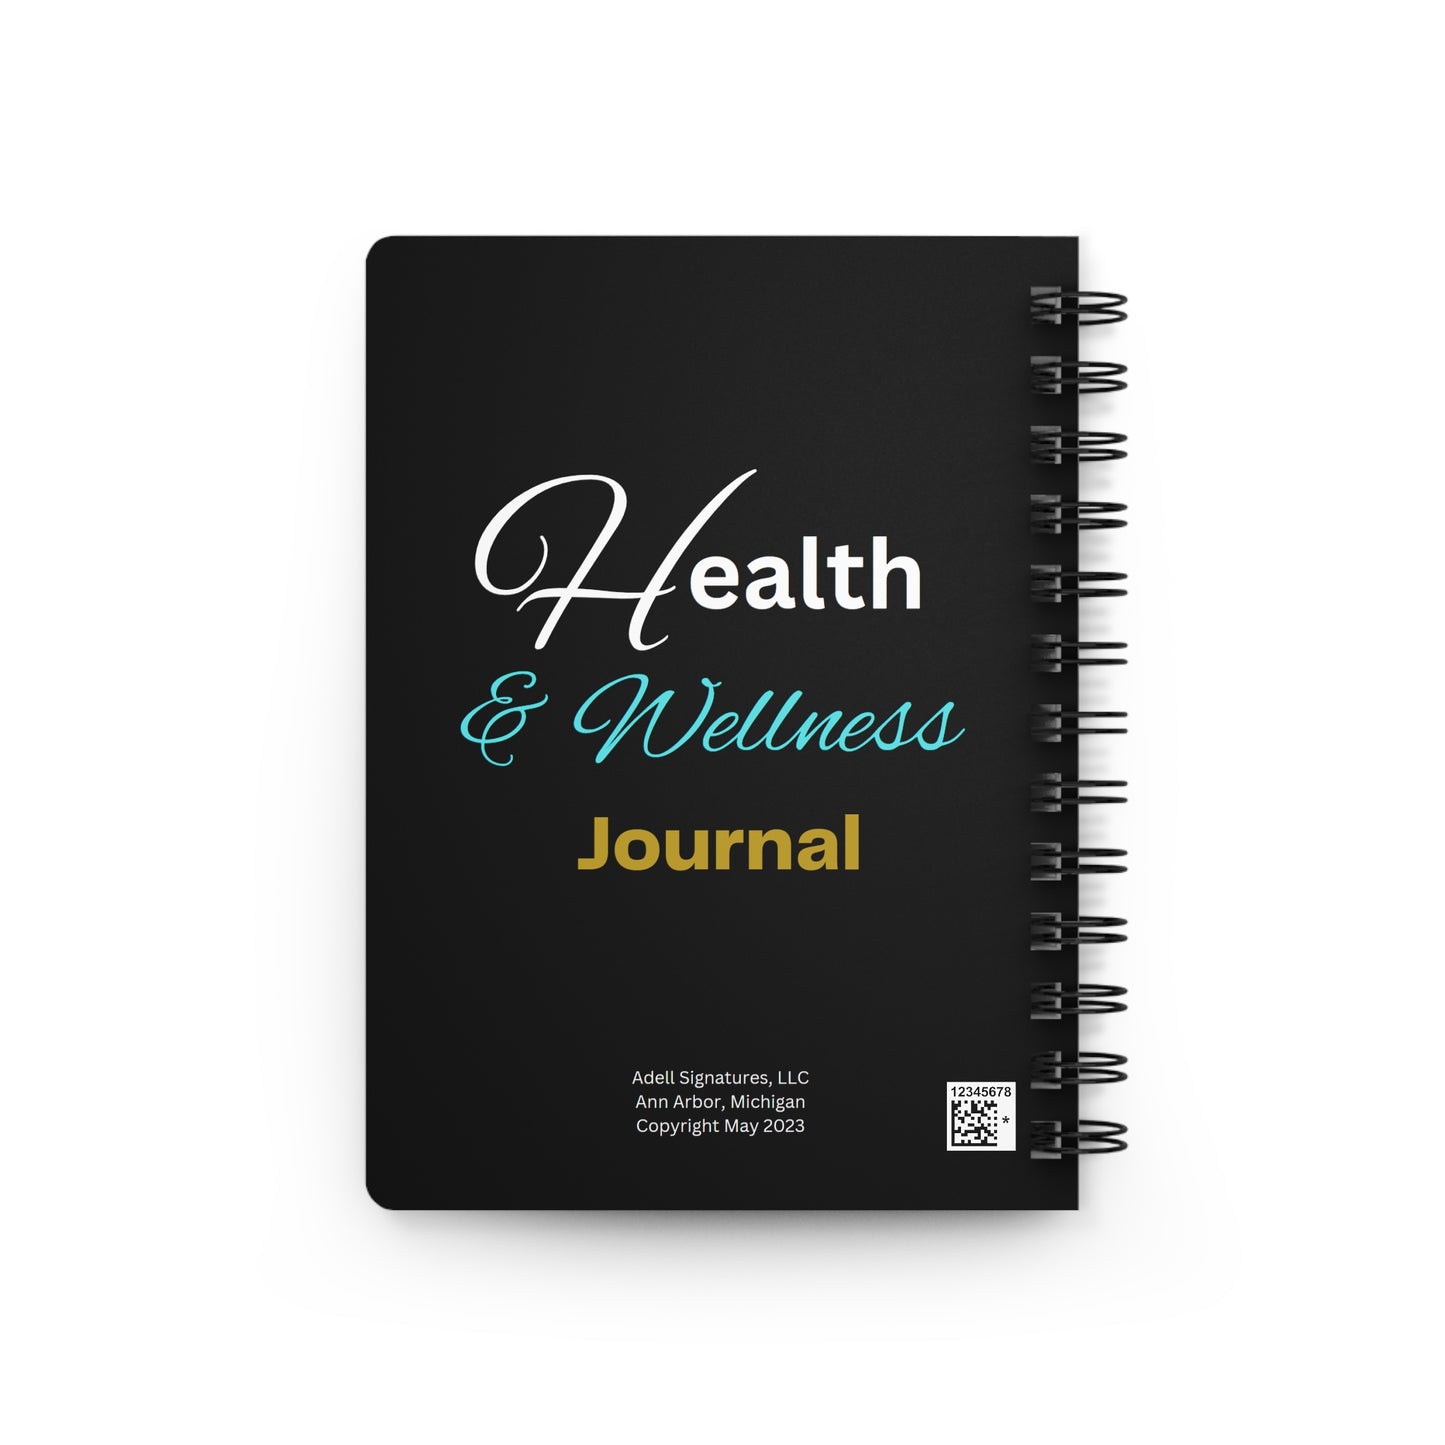 "Health & Wellness Journal" Spiral Bound Journal